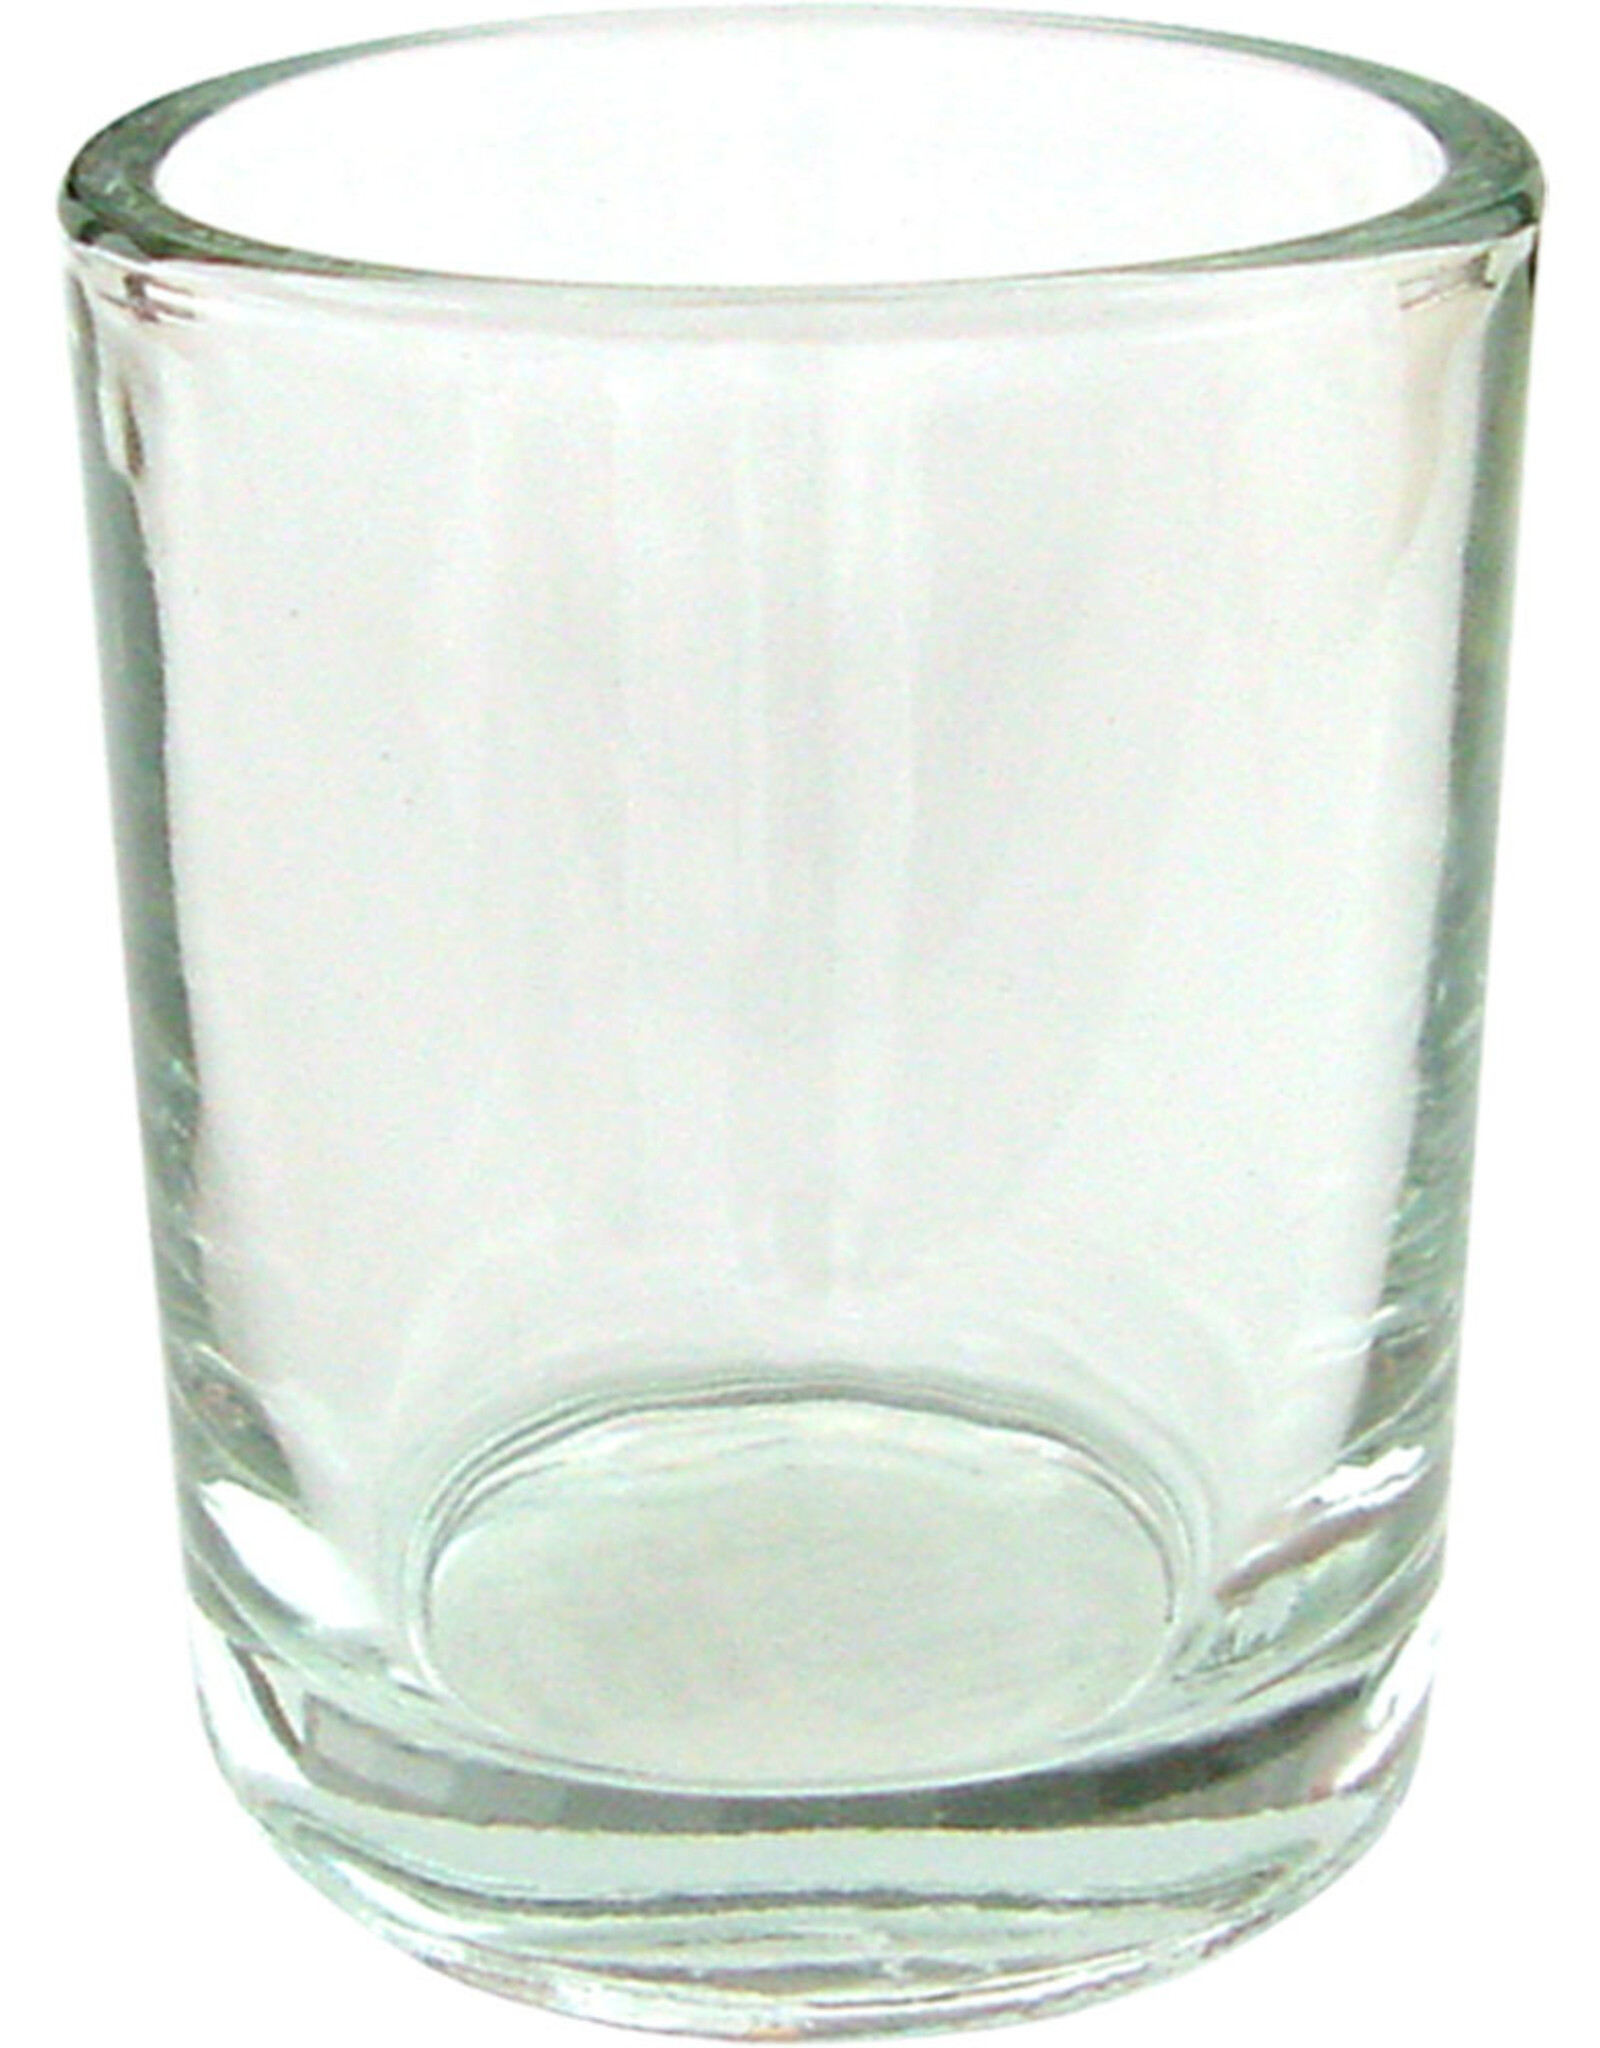 GLASS VOTIVE HOLDER/CLEAR-2.5"